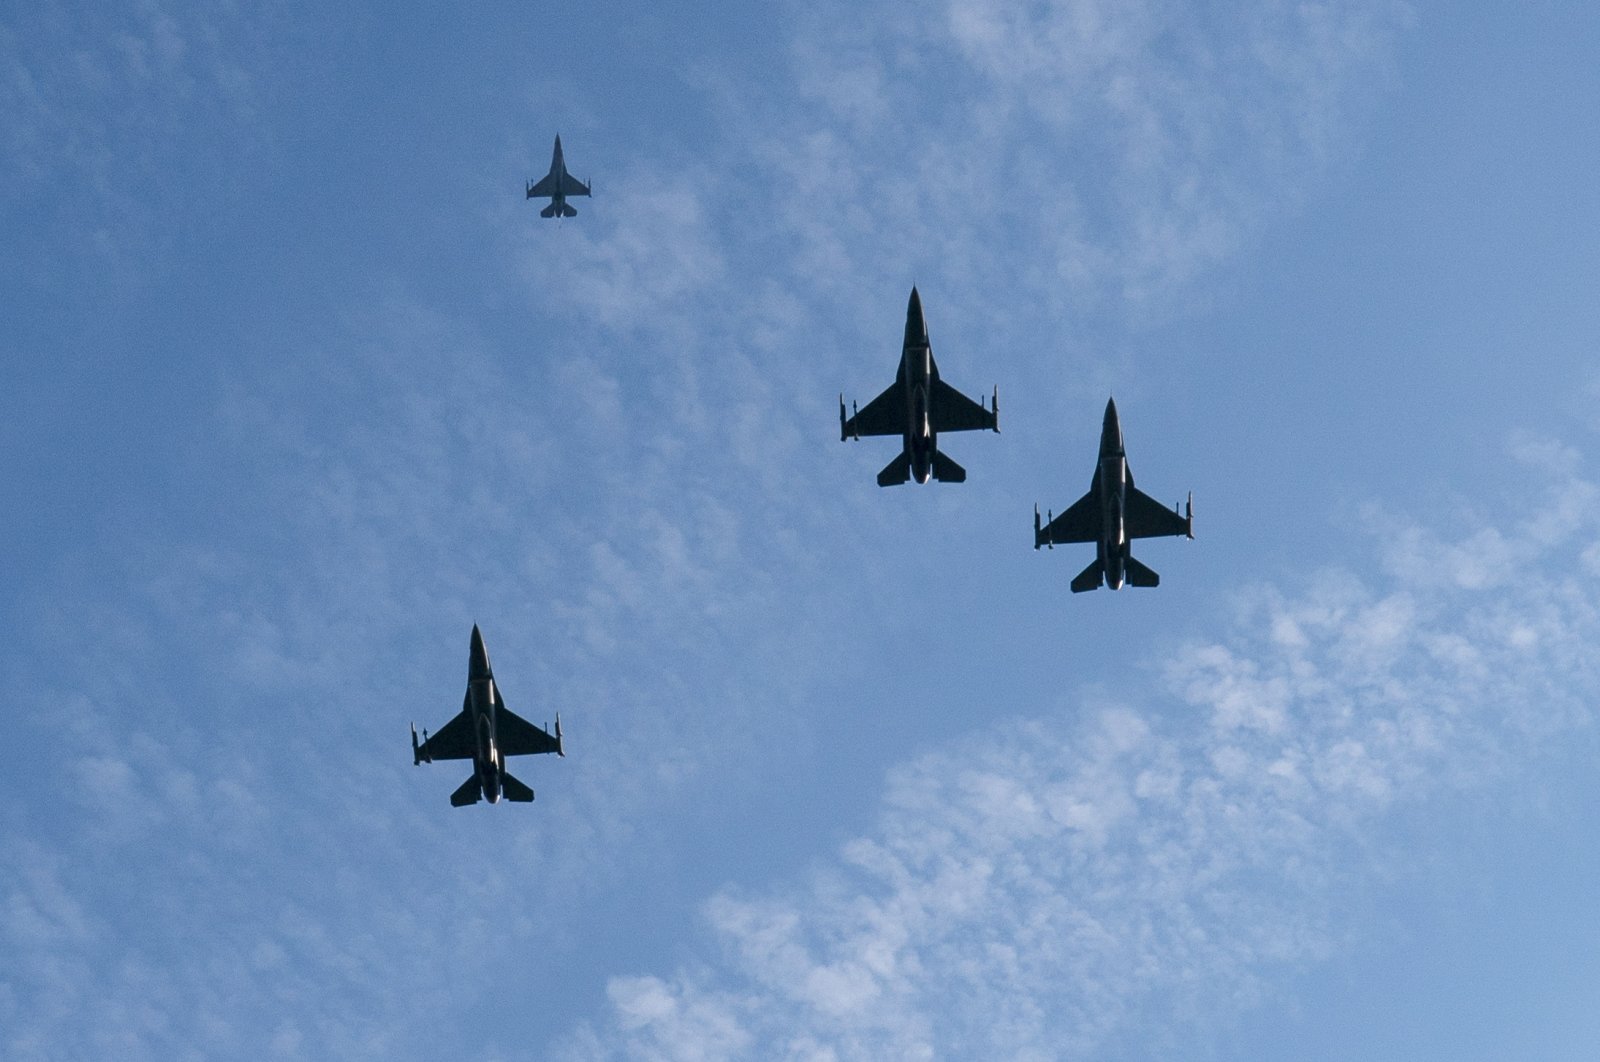 Turki mengatakan untuk mencari di tempat lain jika ada pendekatan negatif AS pada F-16